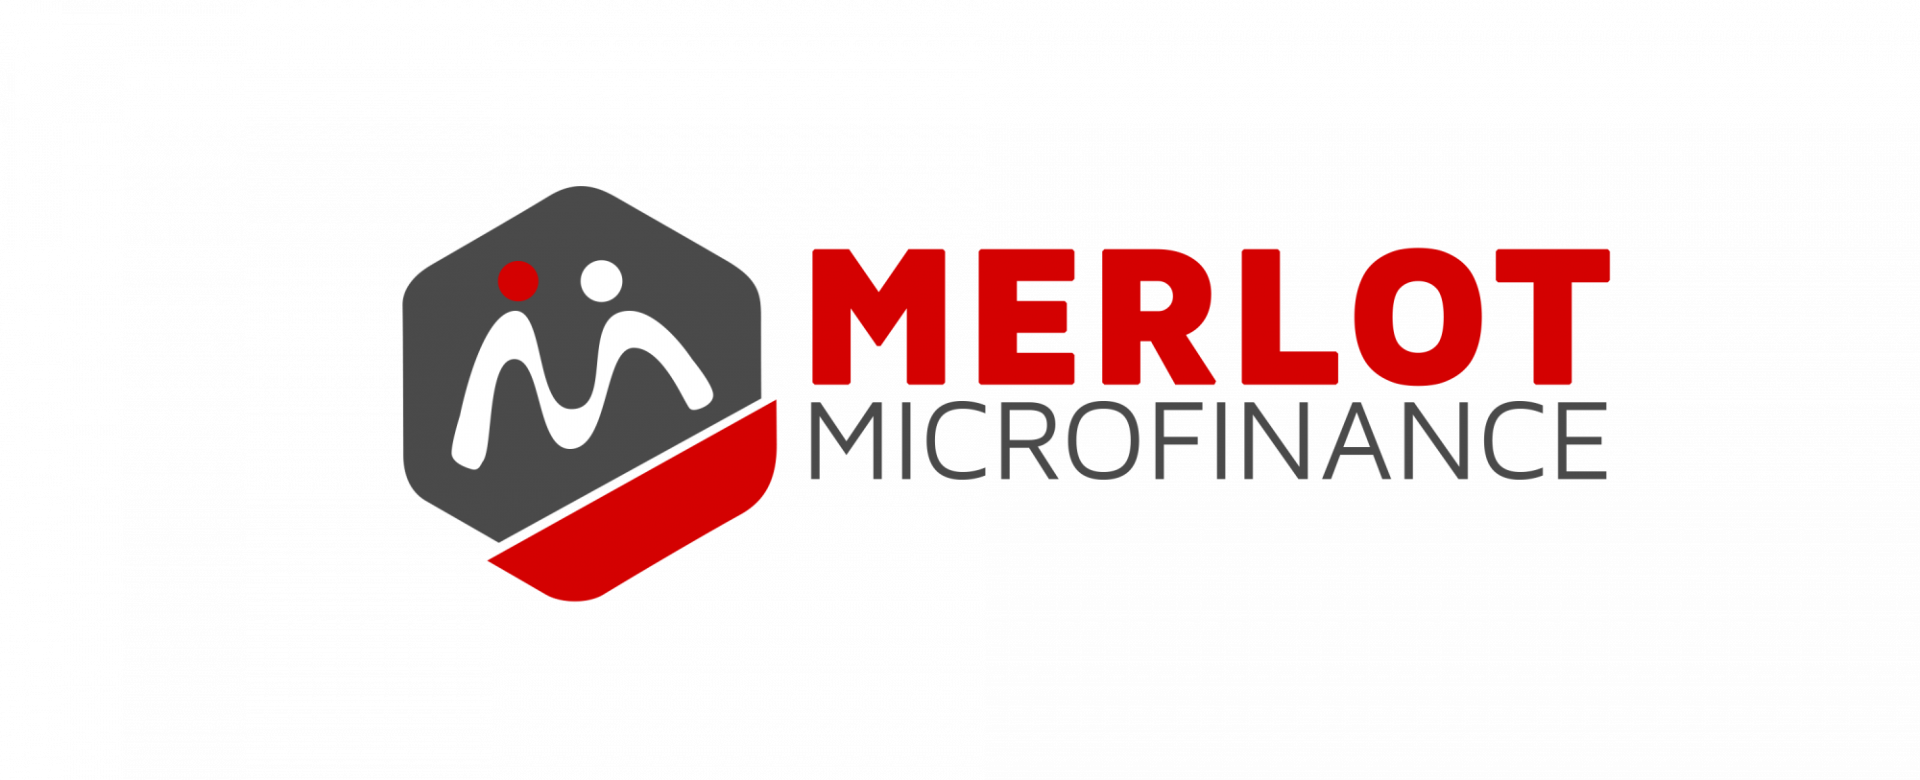 MERLOT MICROFINANCE logo 1